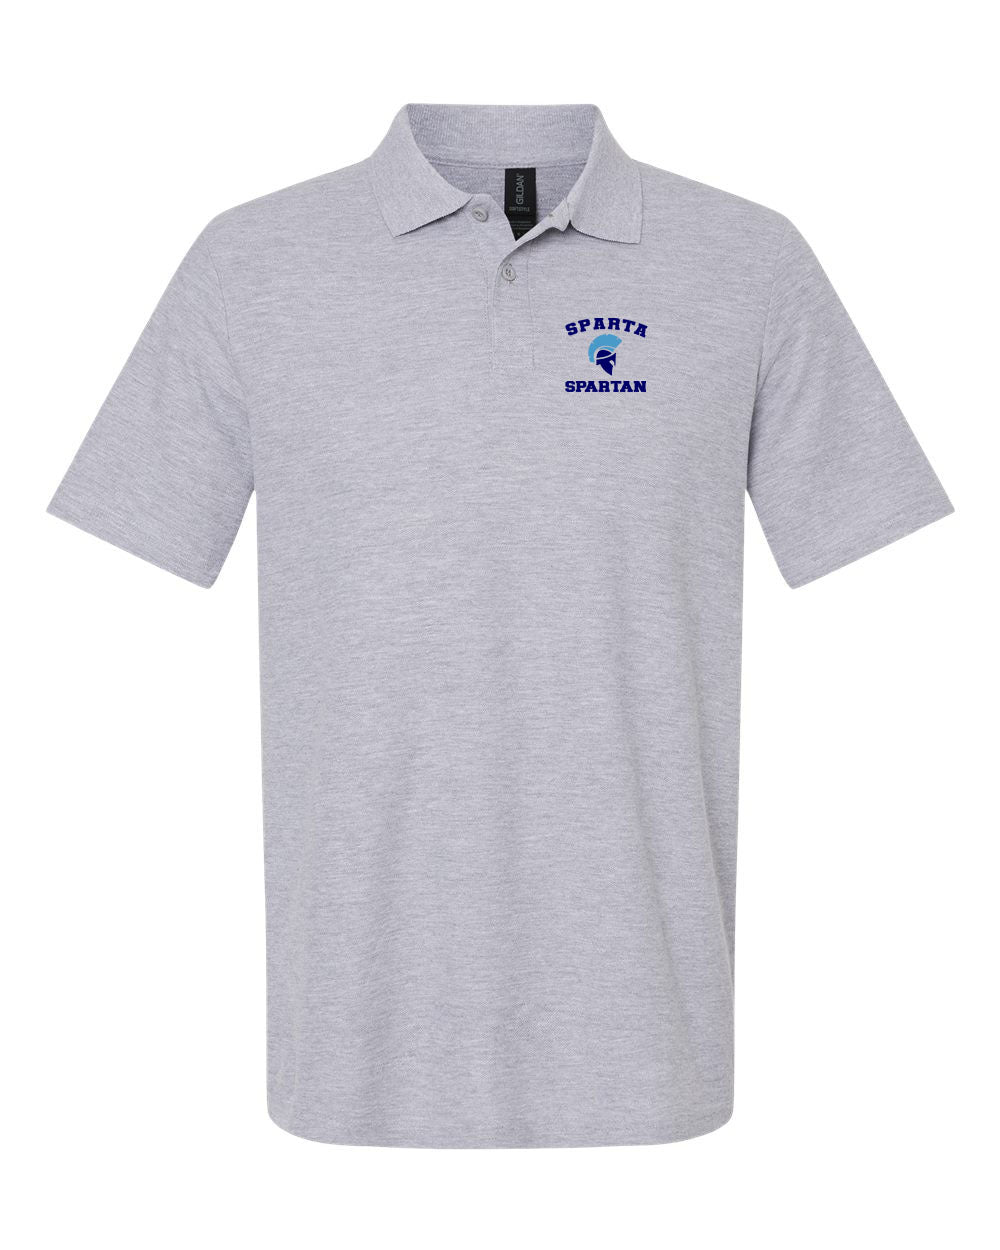 Sparta School Design 1 Polo T-Shirt